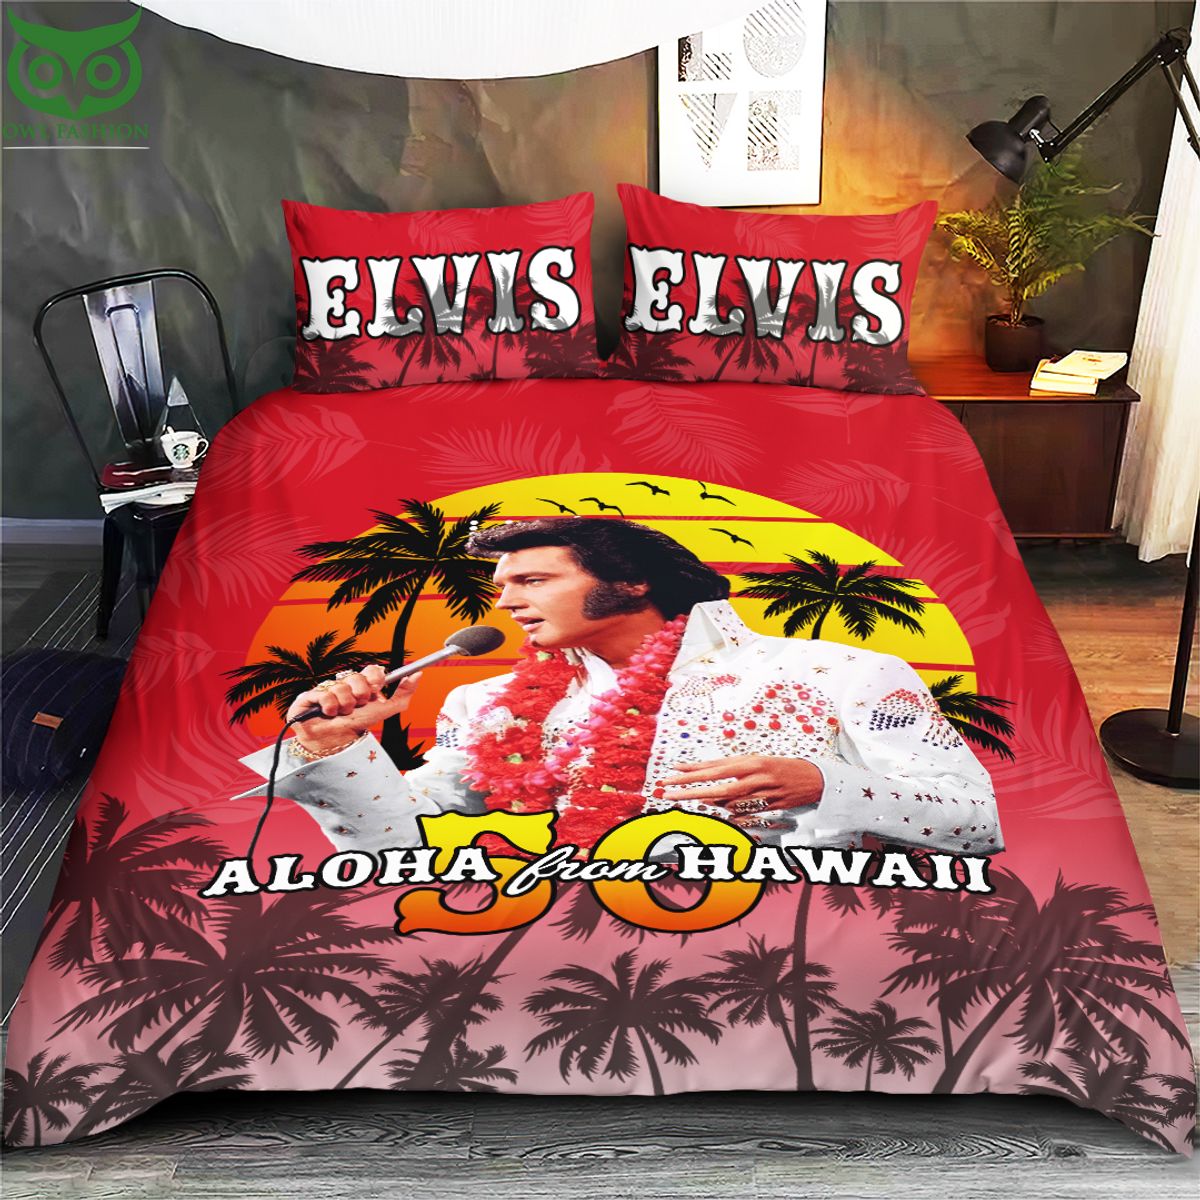 Elvis Presley Aloha From Hawaii Bedding set